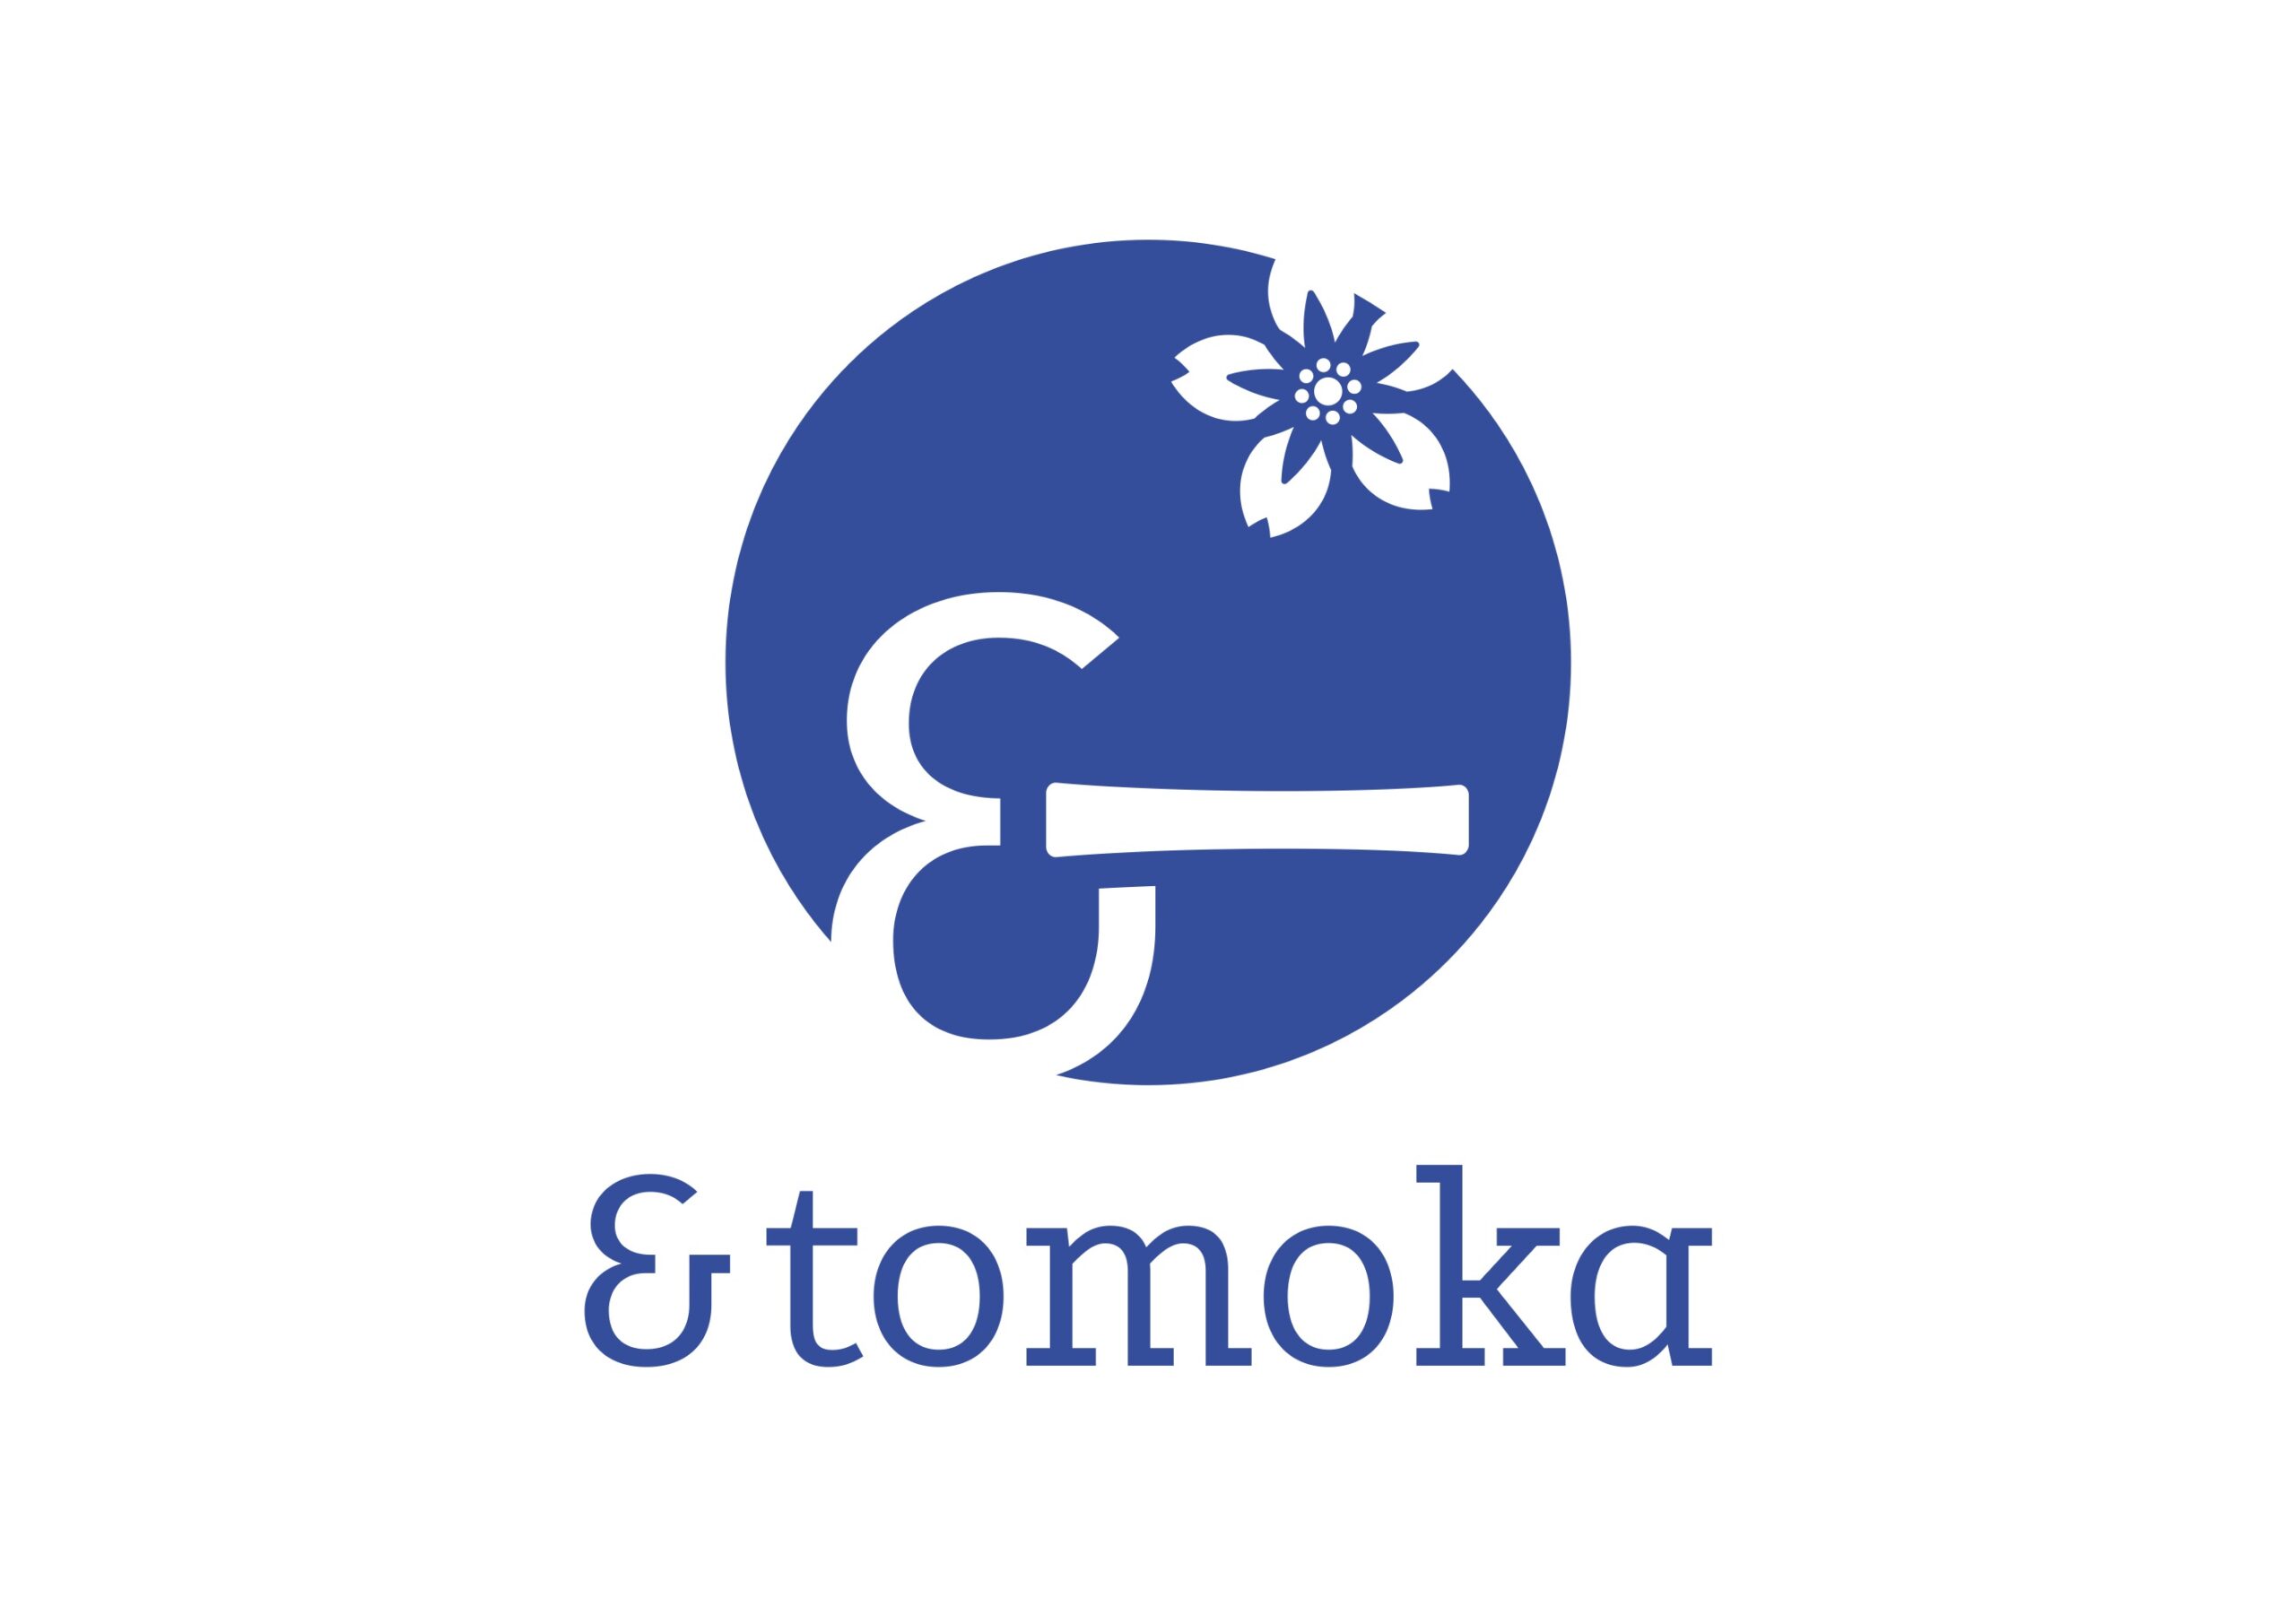 株式会社TOMOKA（＆tomoka）